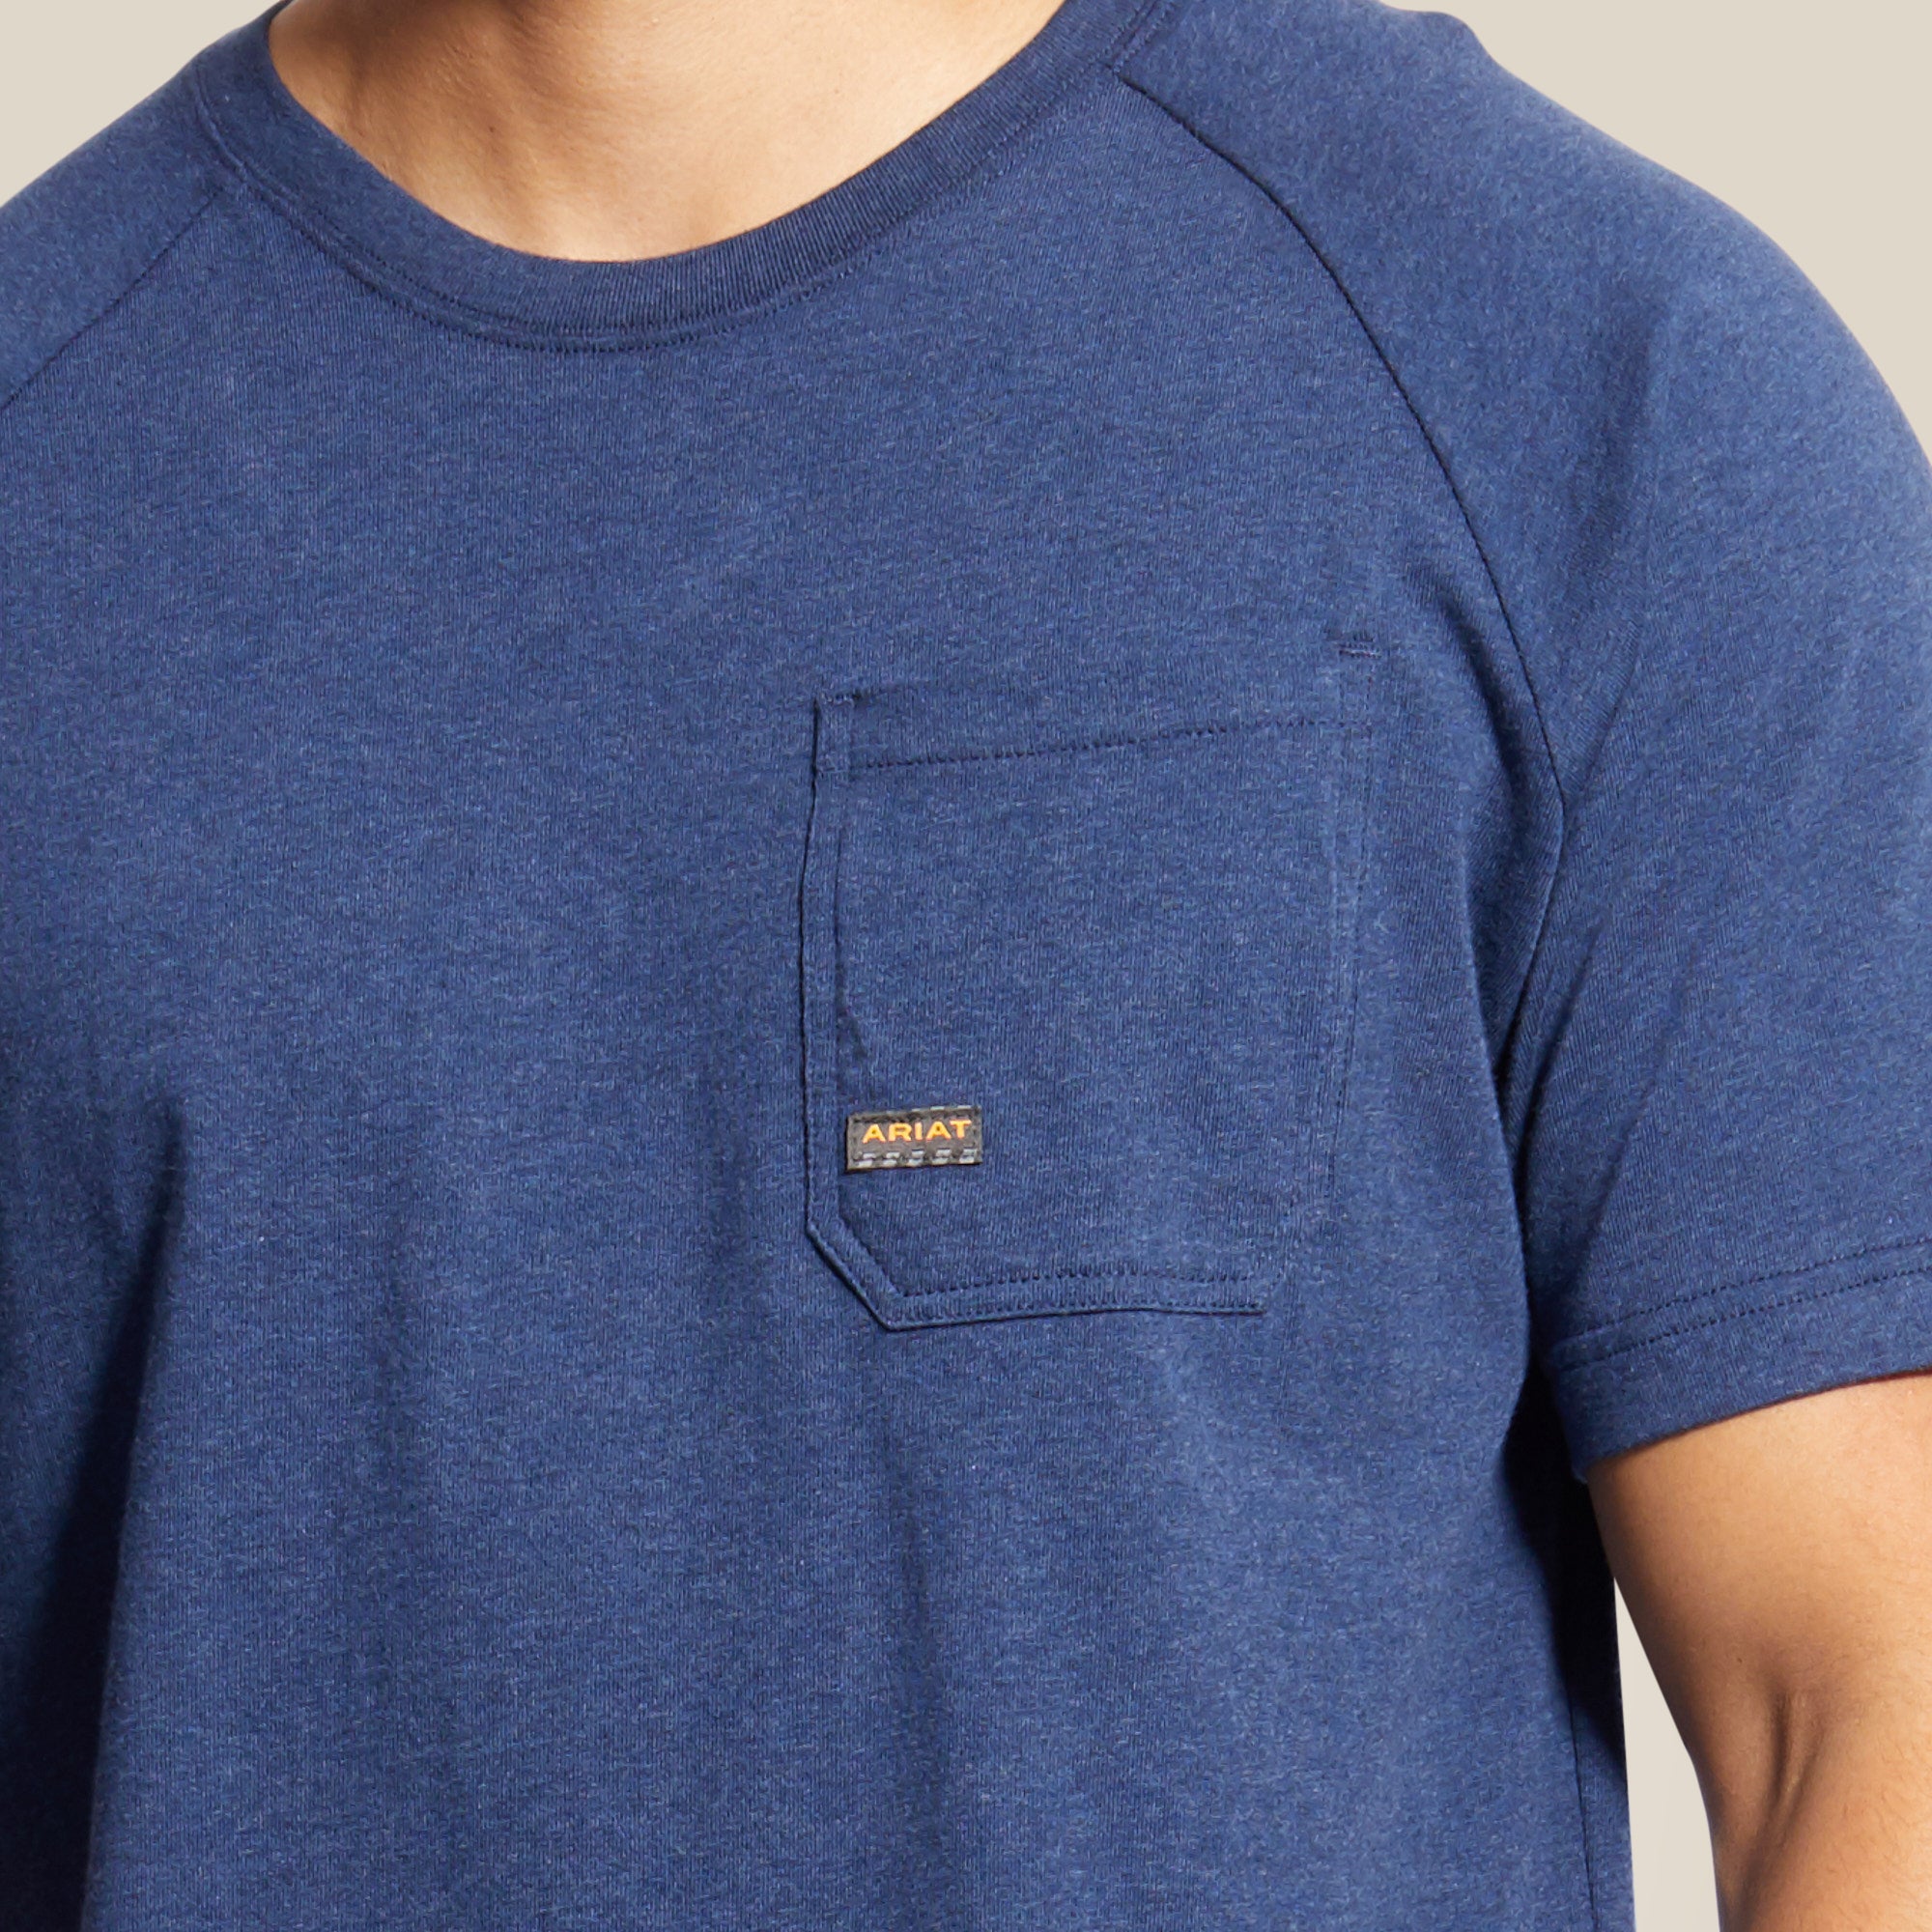 Kurzarm Shirt MNS Rebar Cotton Strong T-Shirt navy heather | 10025378